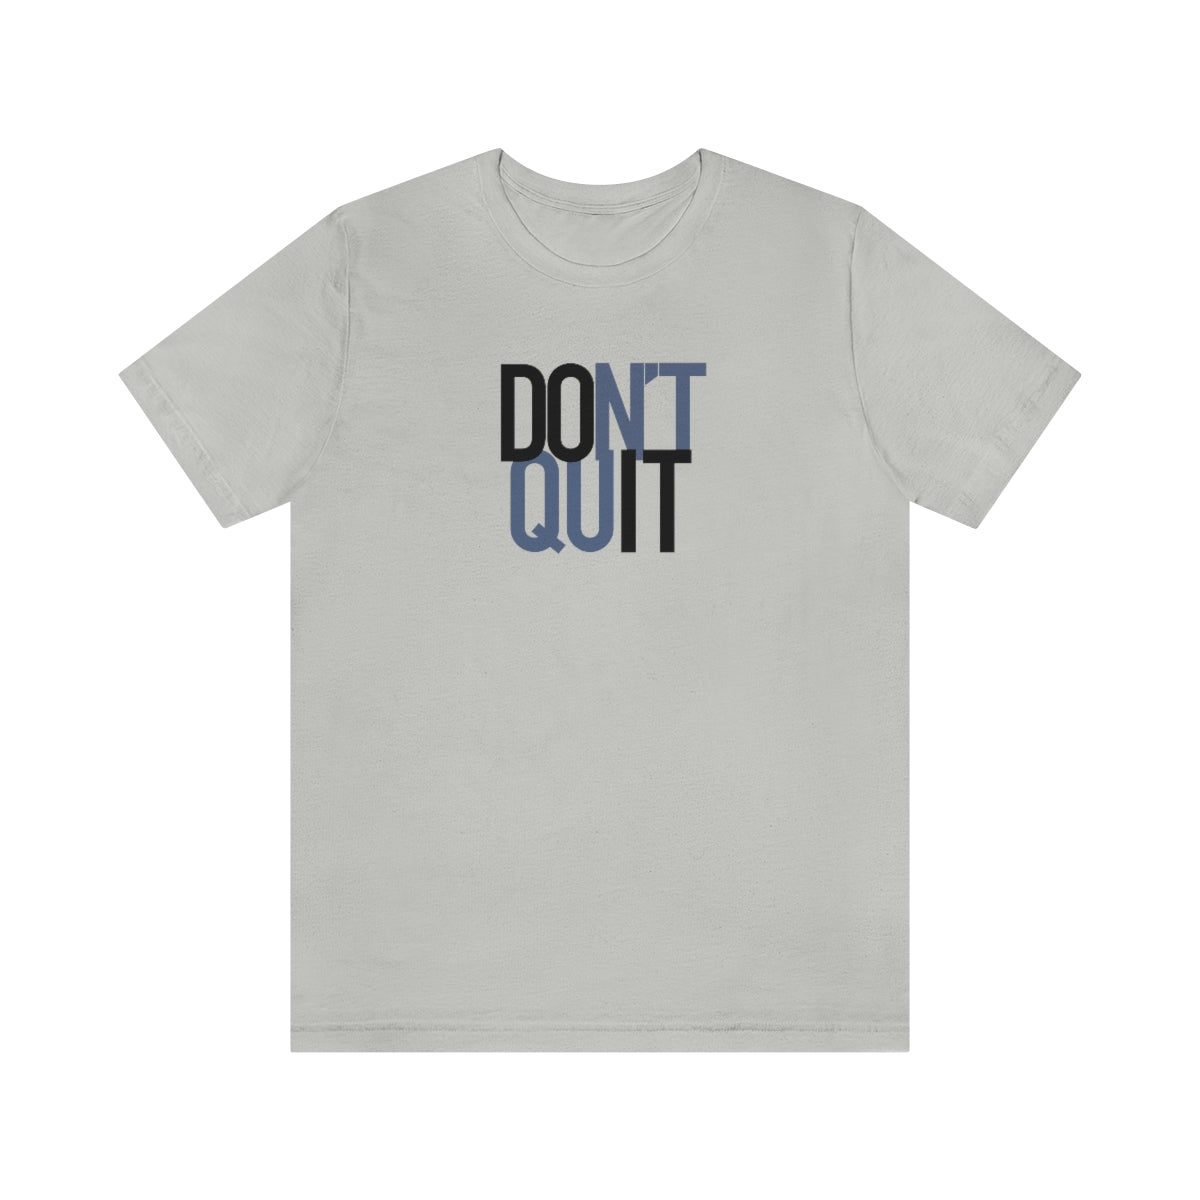 T-shirt - Don't quit. Do it by nhcreativ - Women T-shirts - Afrikrea